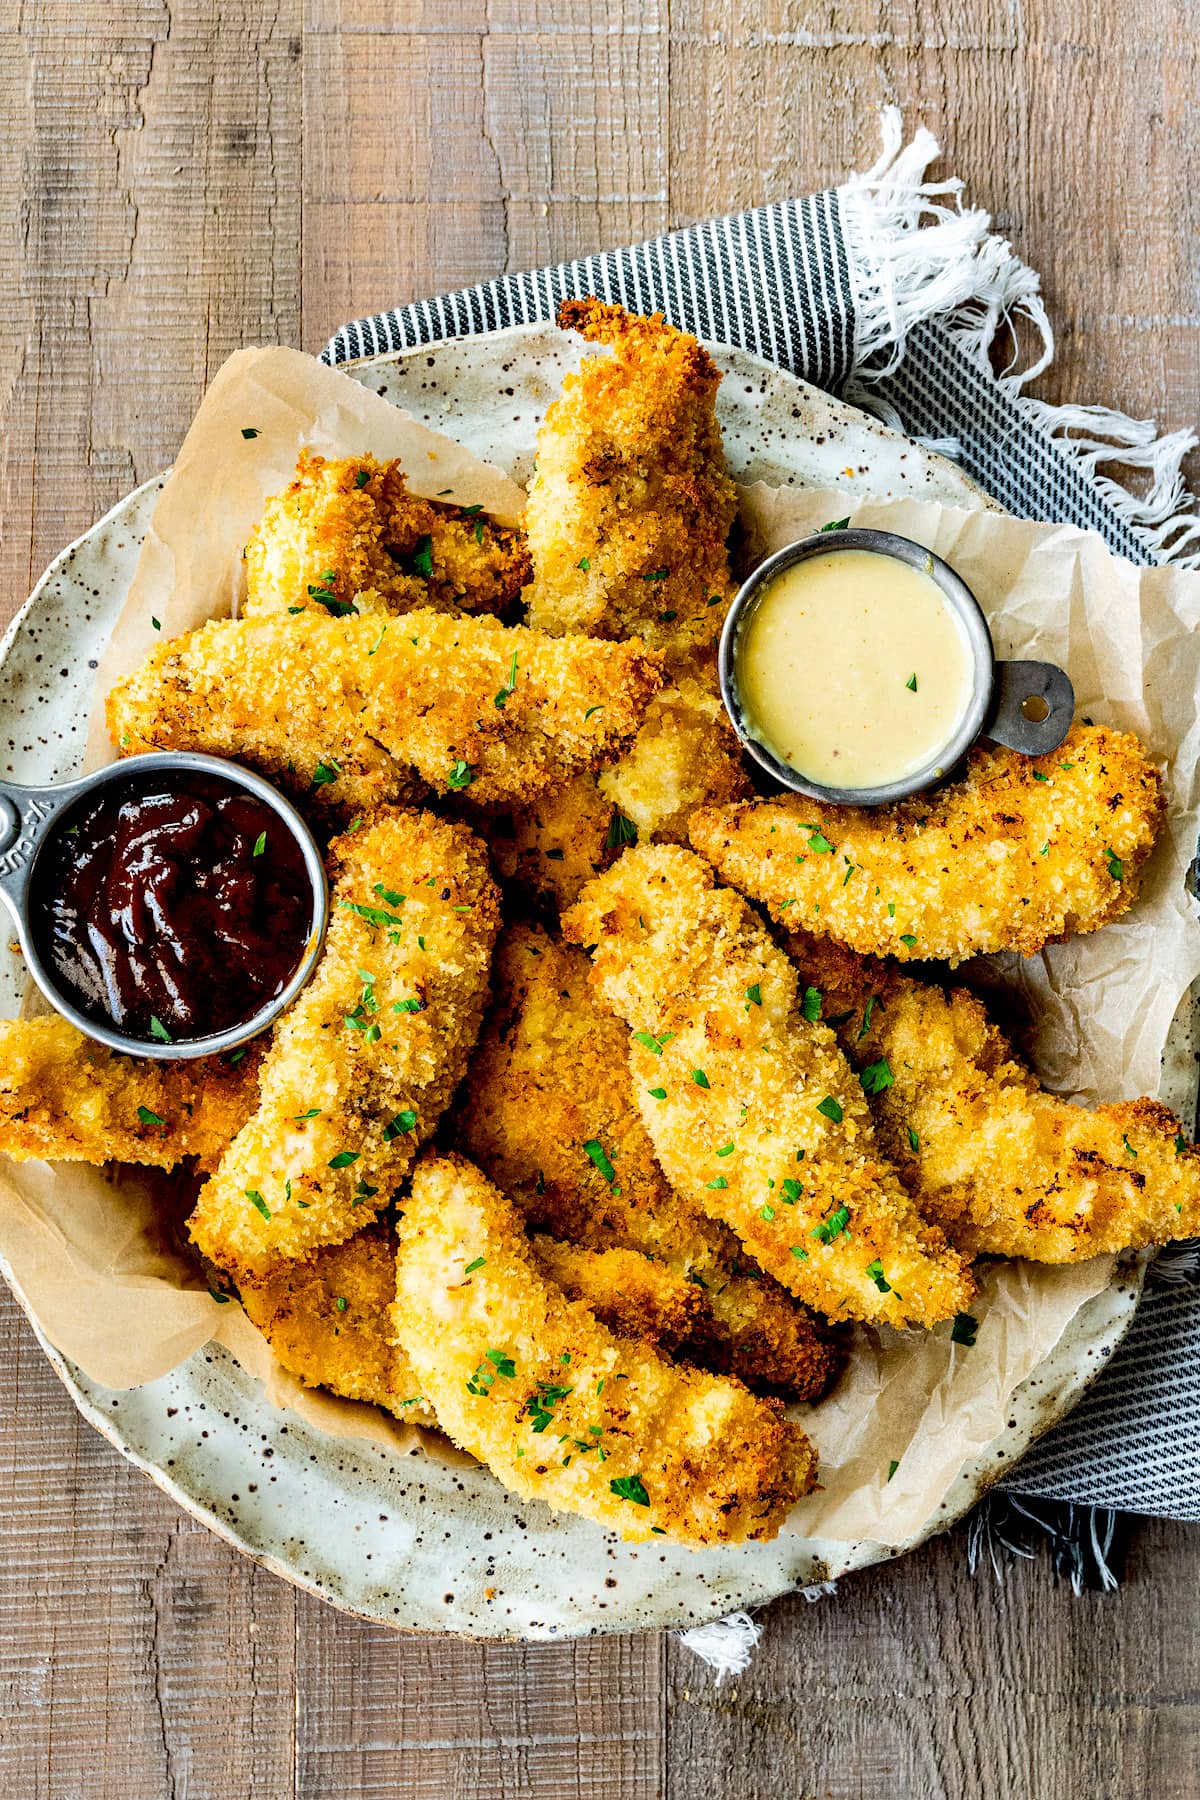 Crunchy-Baked Chicken Strips